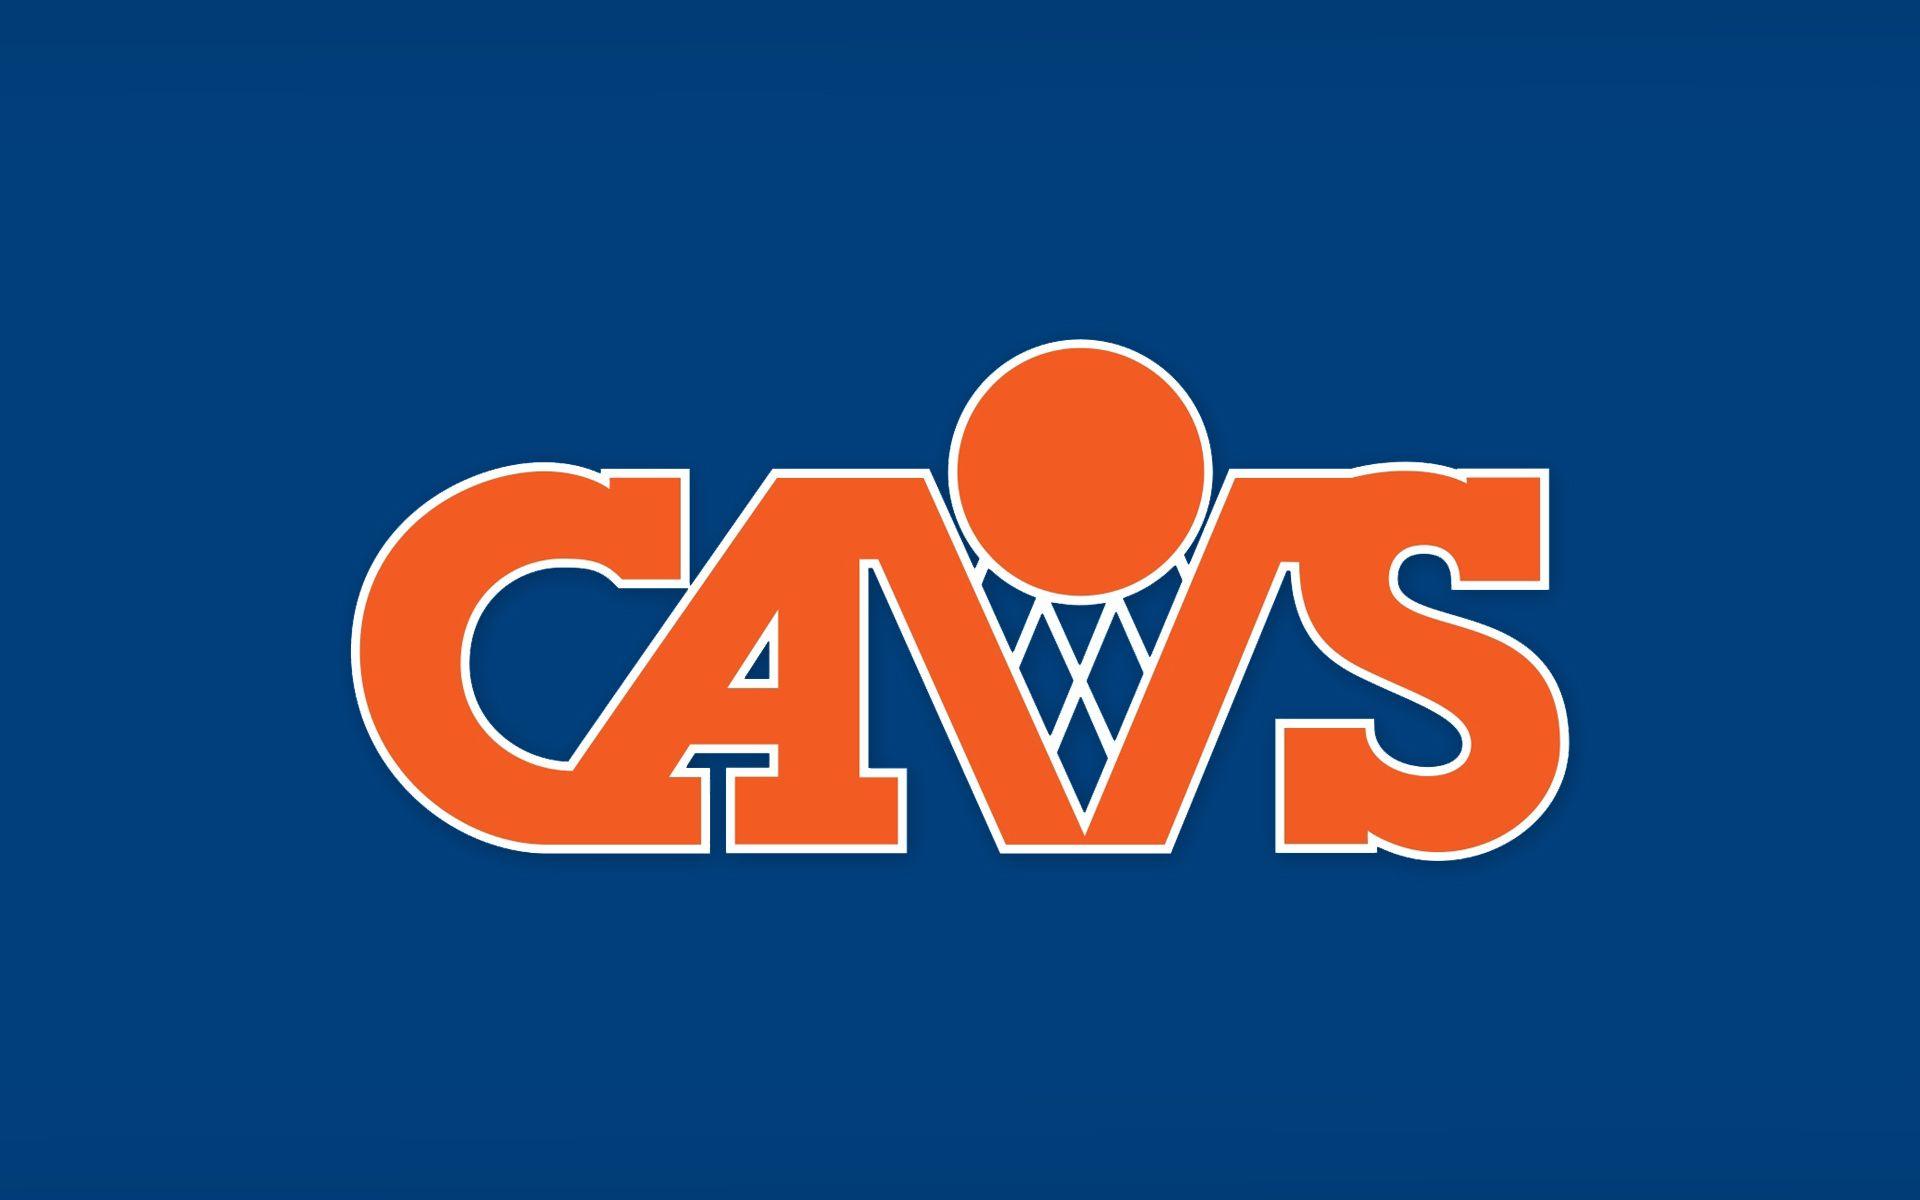 Cleveland Cavaliers Logo Wallpaper HD. Wallpaper, Background